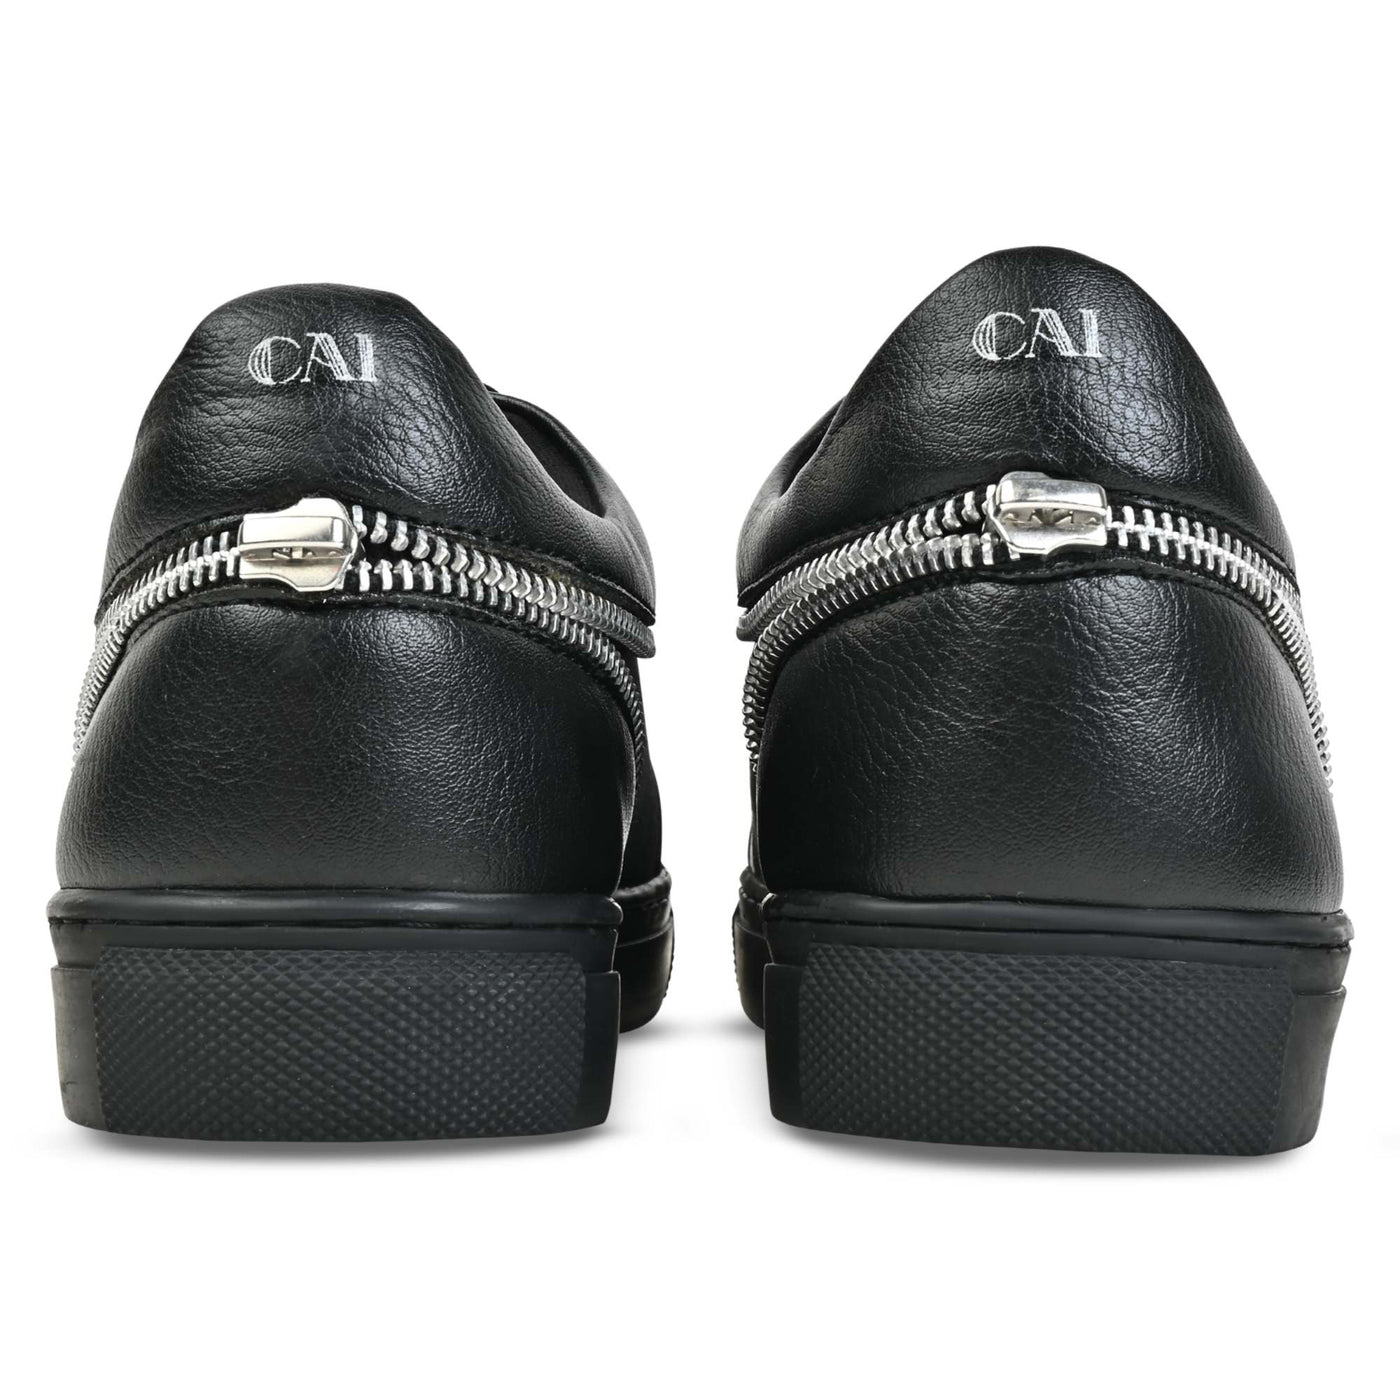 Zipper-Accent Sneakers- Black